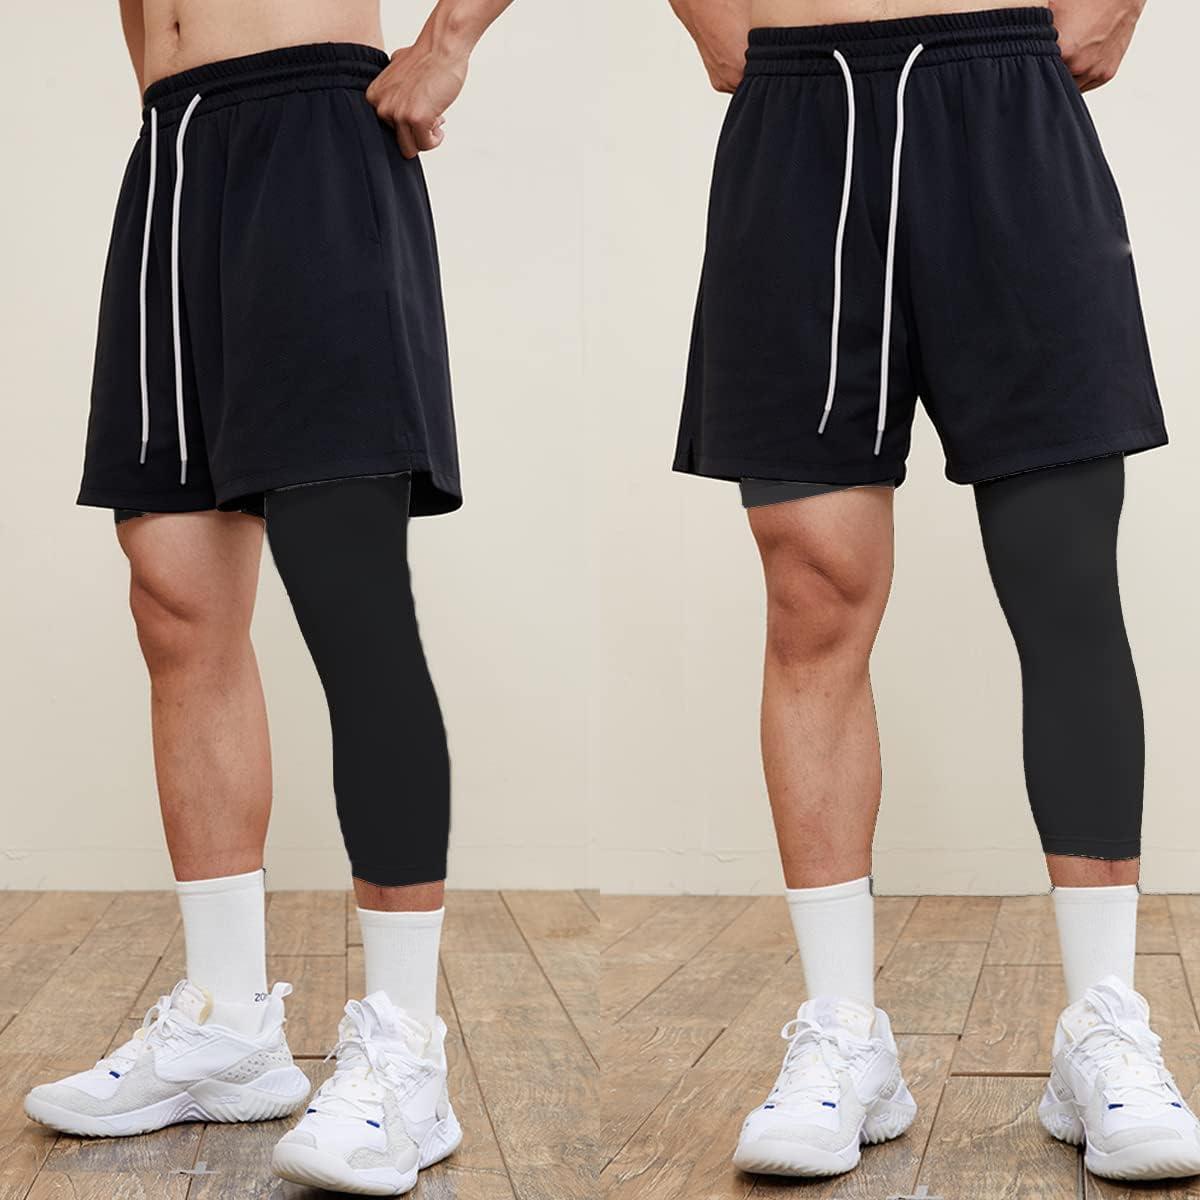 Jonscart Men's 3/4 One Leg Compression Capri Tights Pants Athletic Base  Layer Underwear Black-l Large